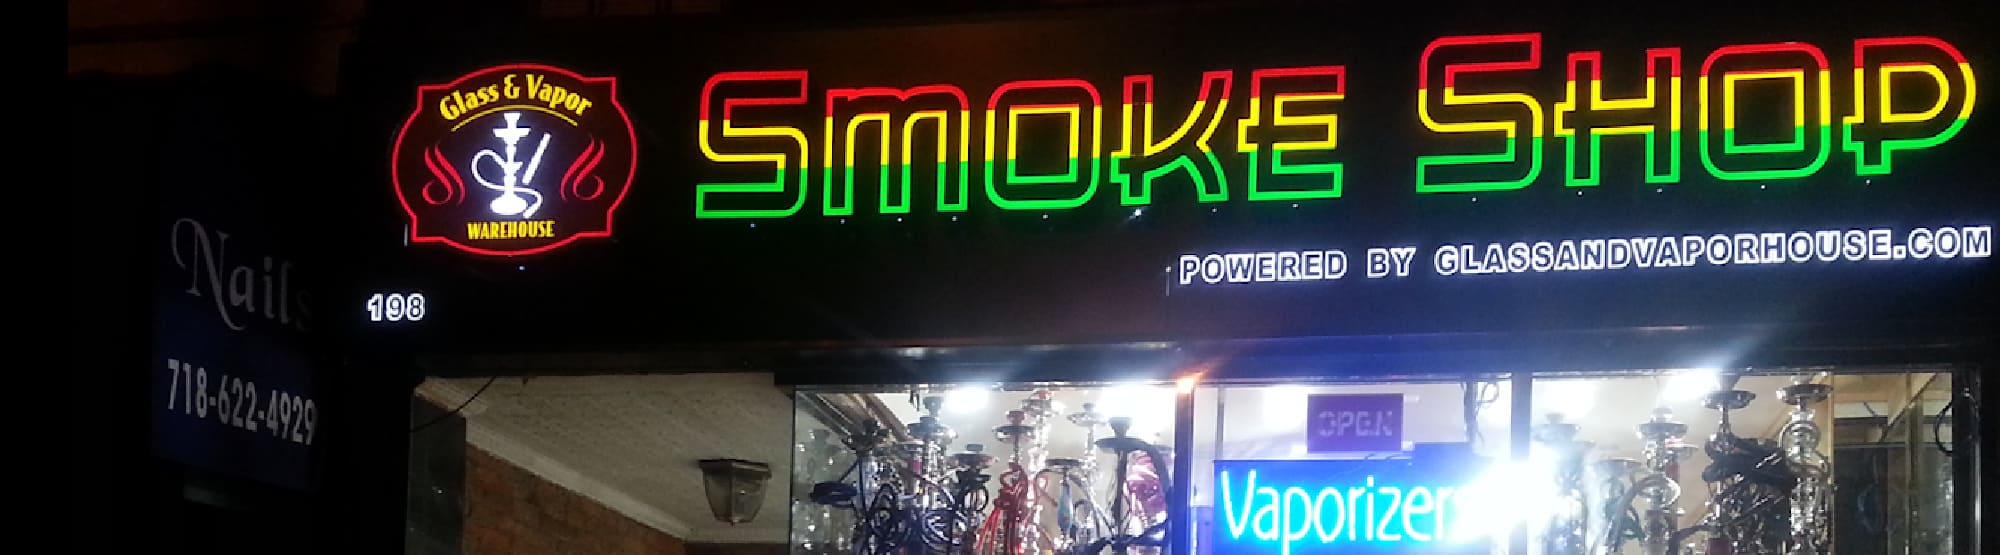 image of brooklyn smoke shop inc in brooklyn ny